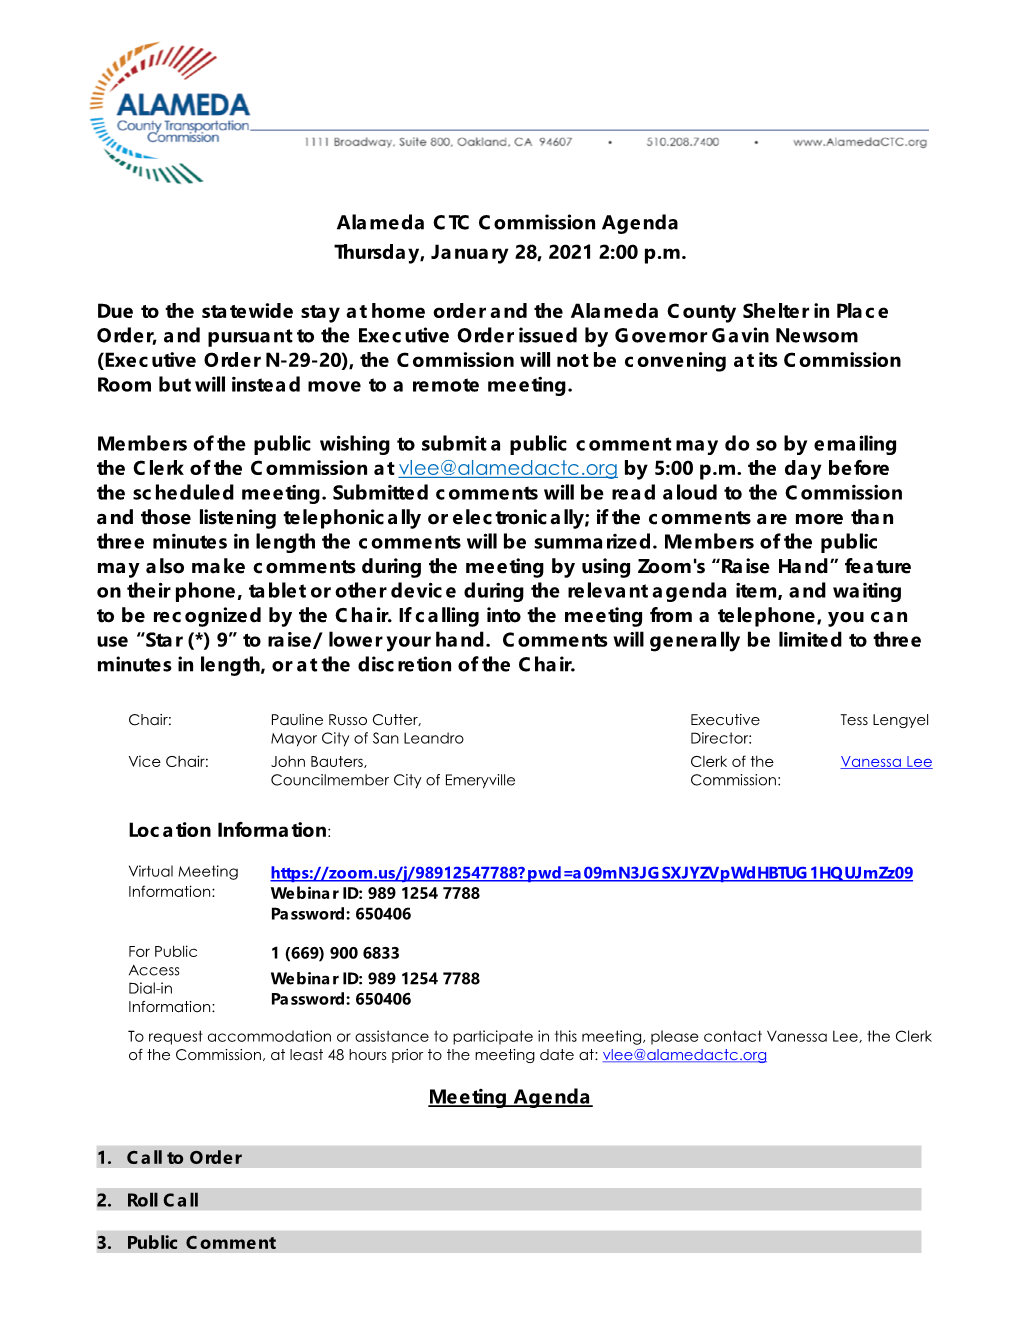 Alameda CTC Commission Agenda Thursday, January 28, 2021 2:00 P.M